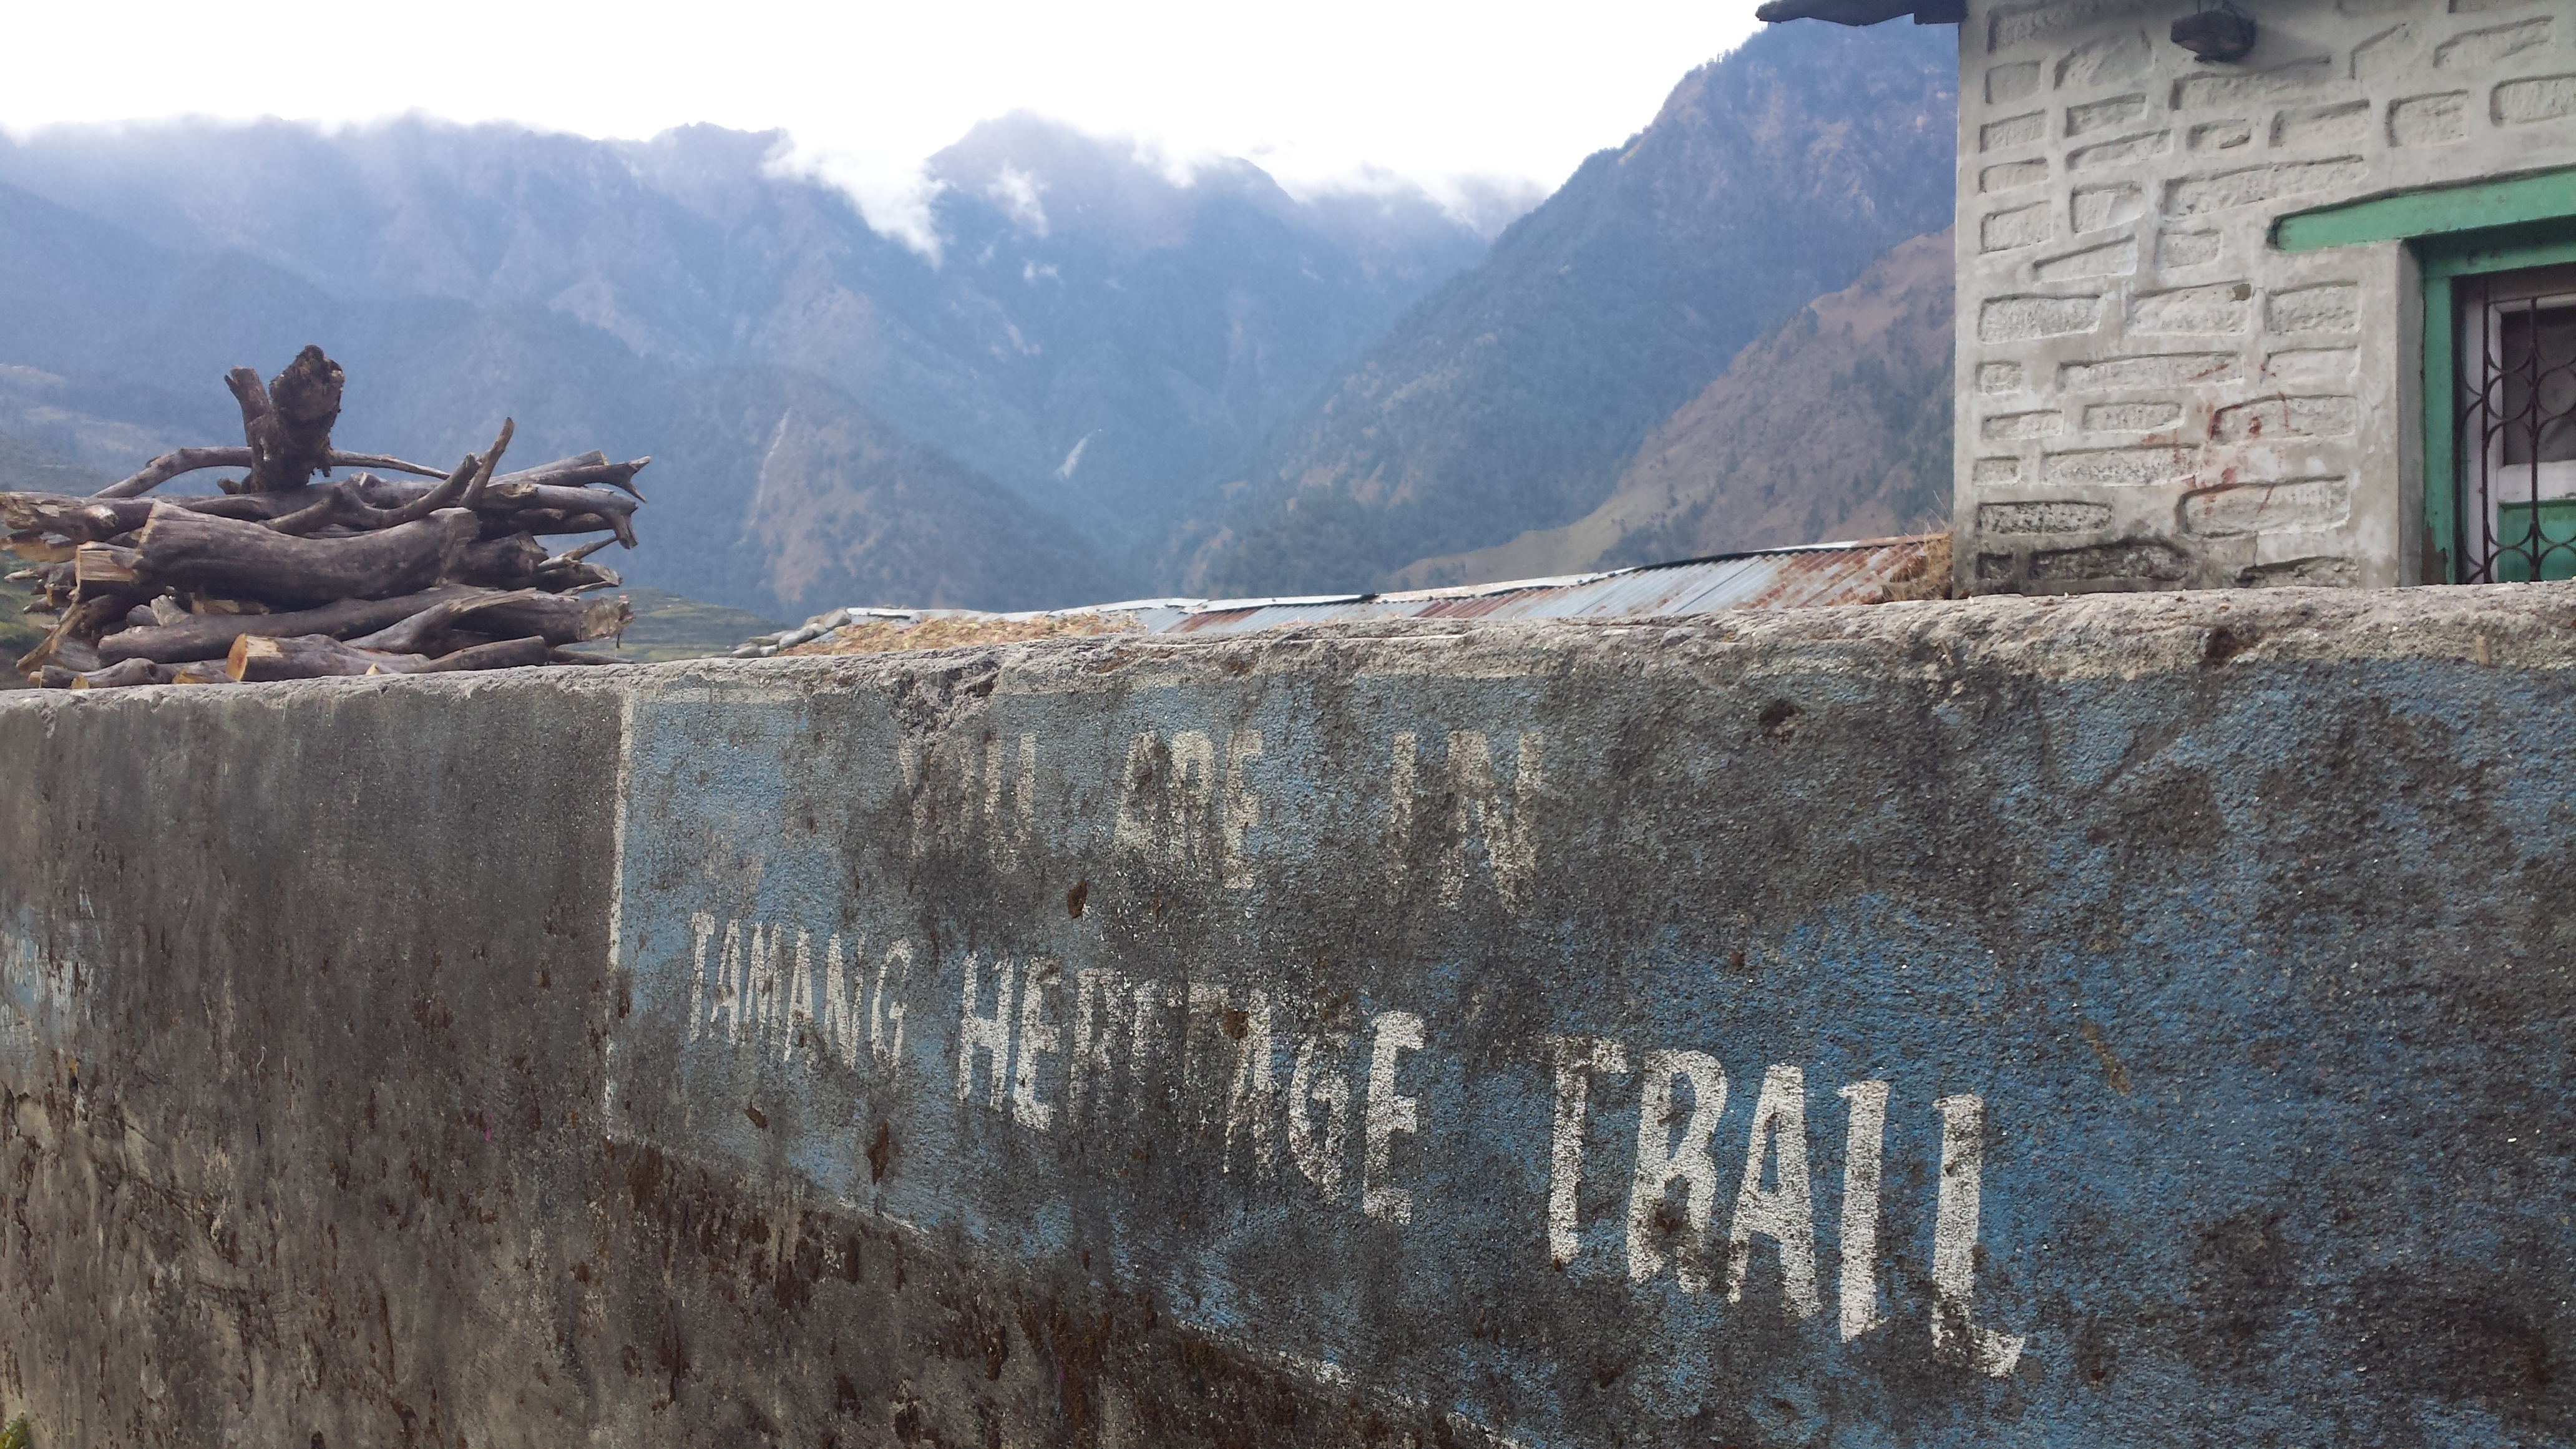 Tamang Heritage Trail